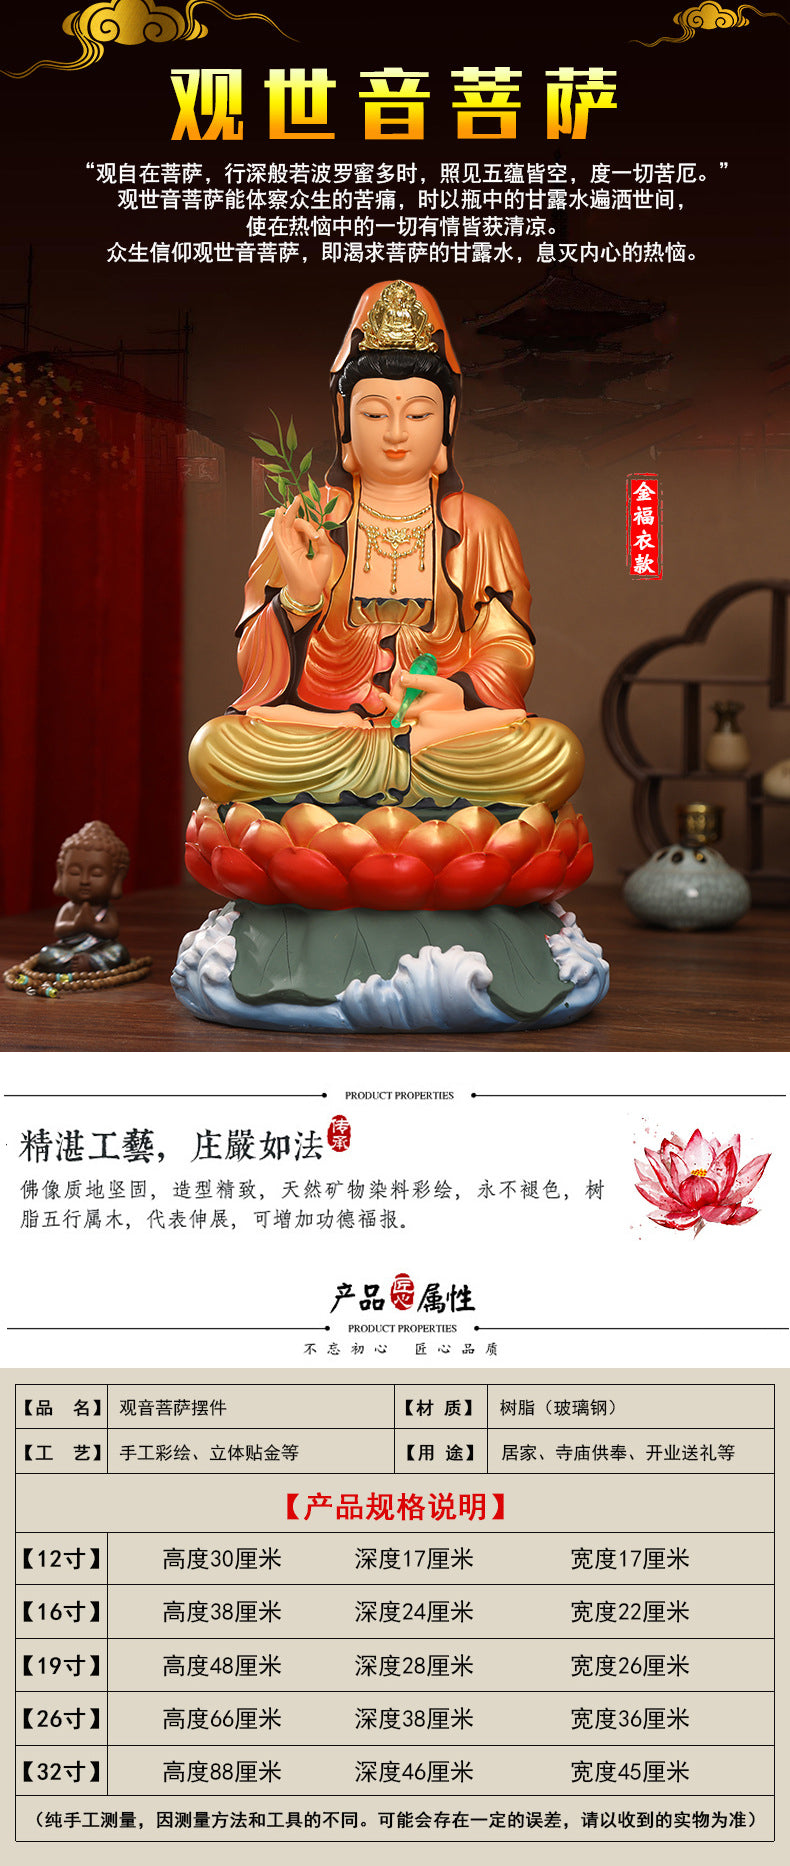 Avalokiteshvara Bodhisattva Guan Yin Statue on Lotus for Sale Details 1